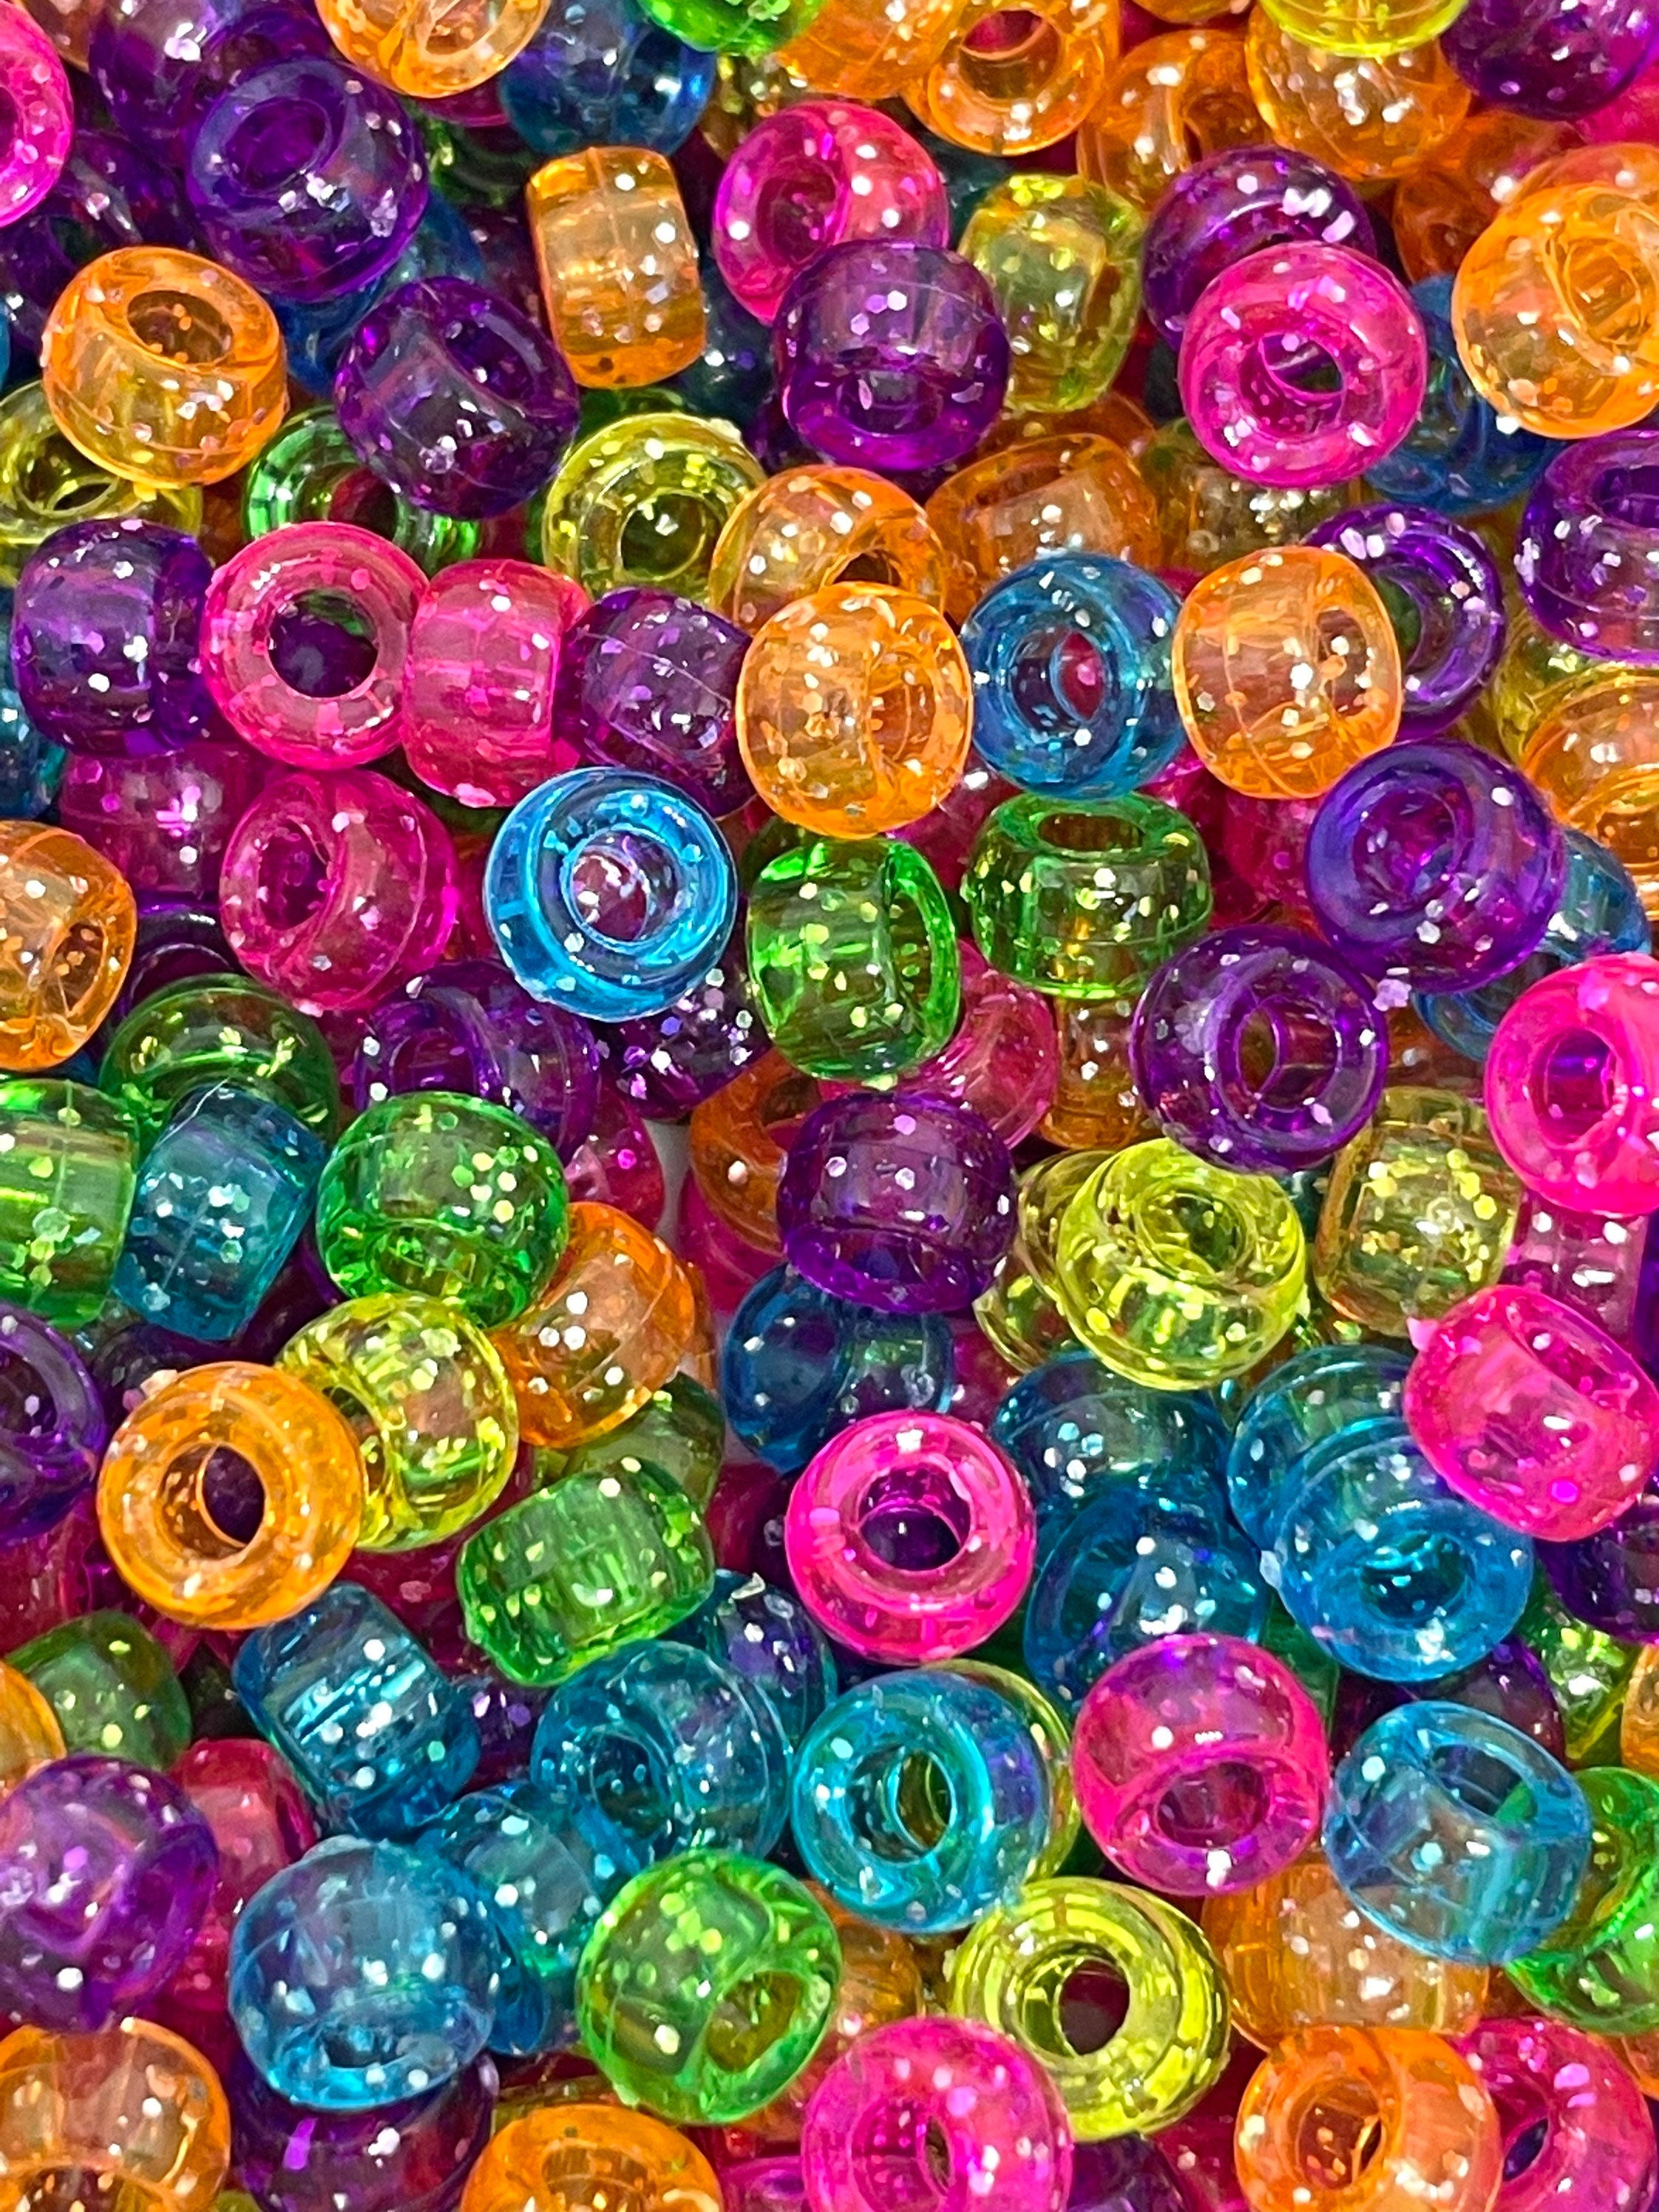 Bright Pastel Pony Beads, Rainbow Mixed Beads, Craft Beads